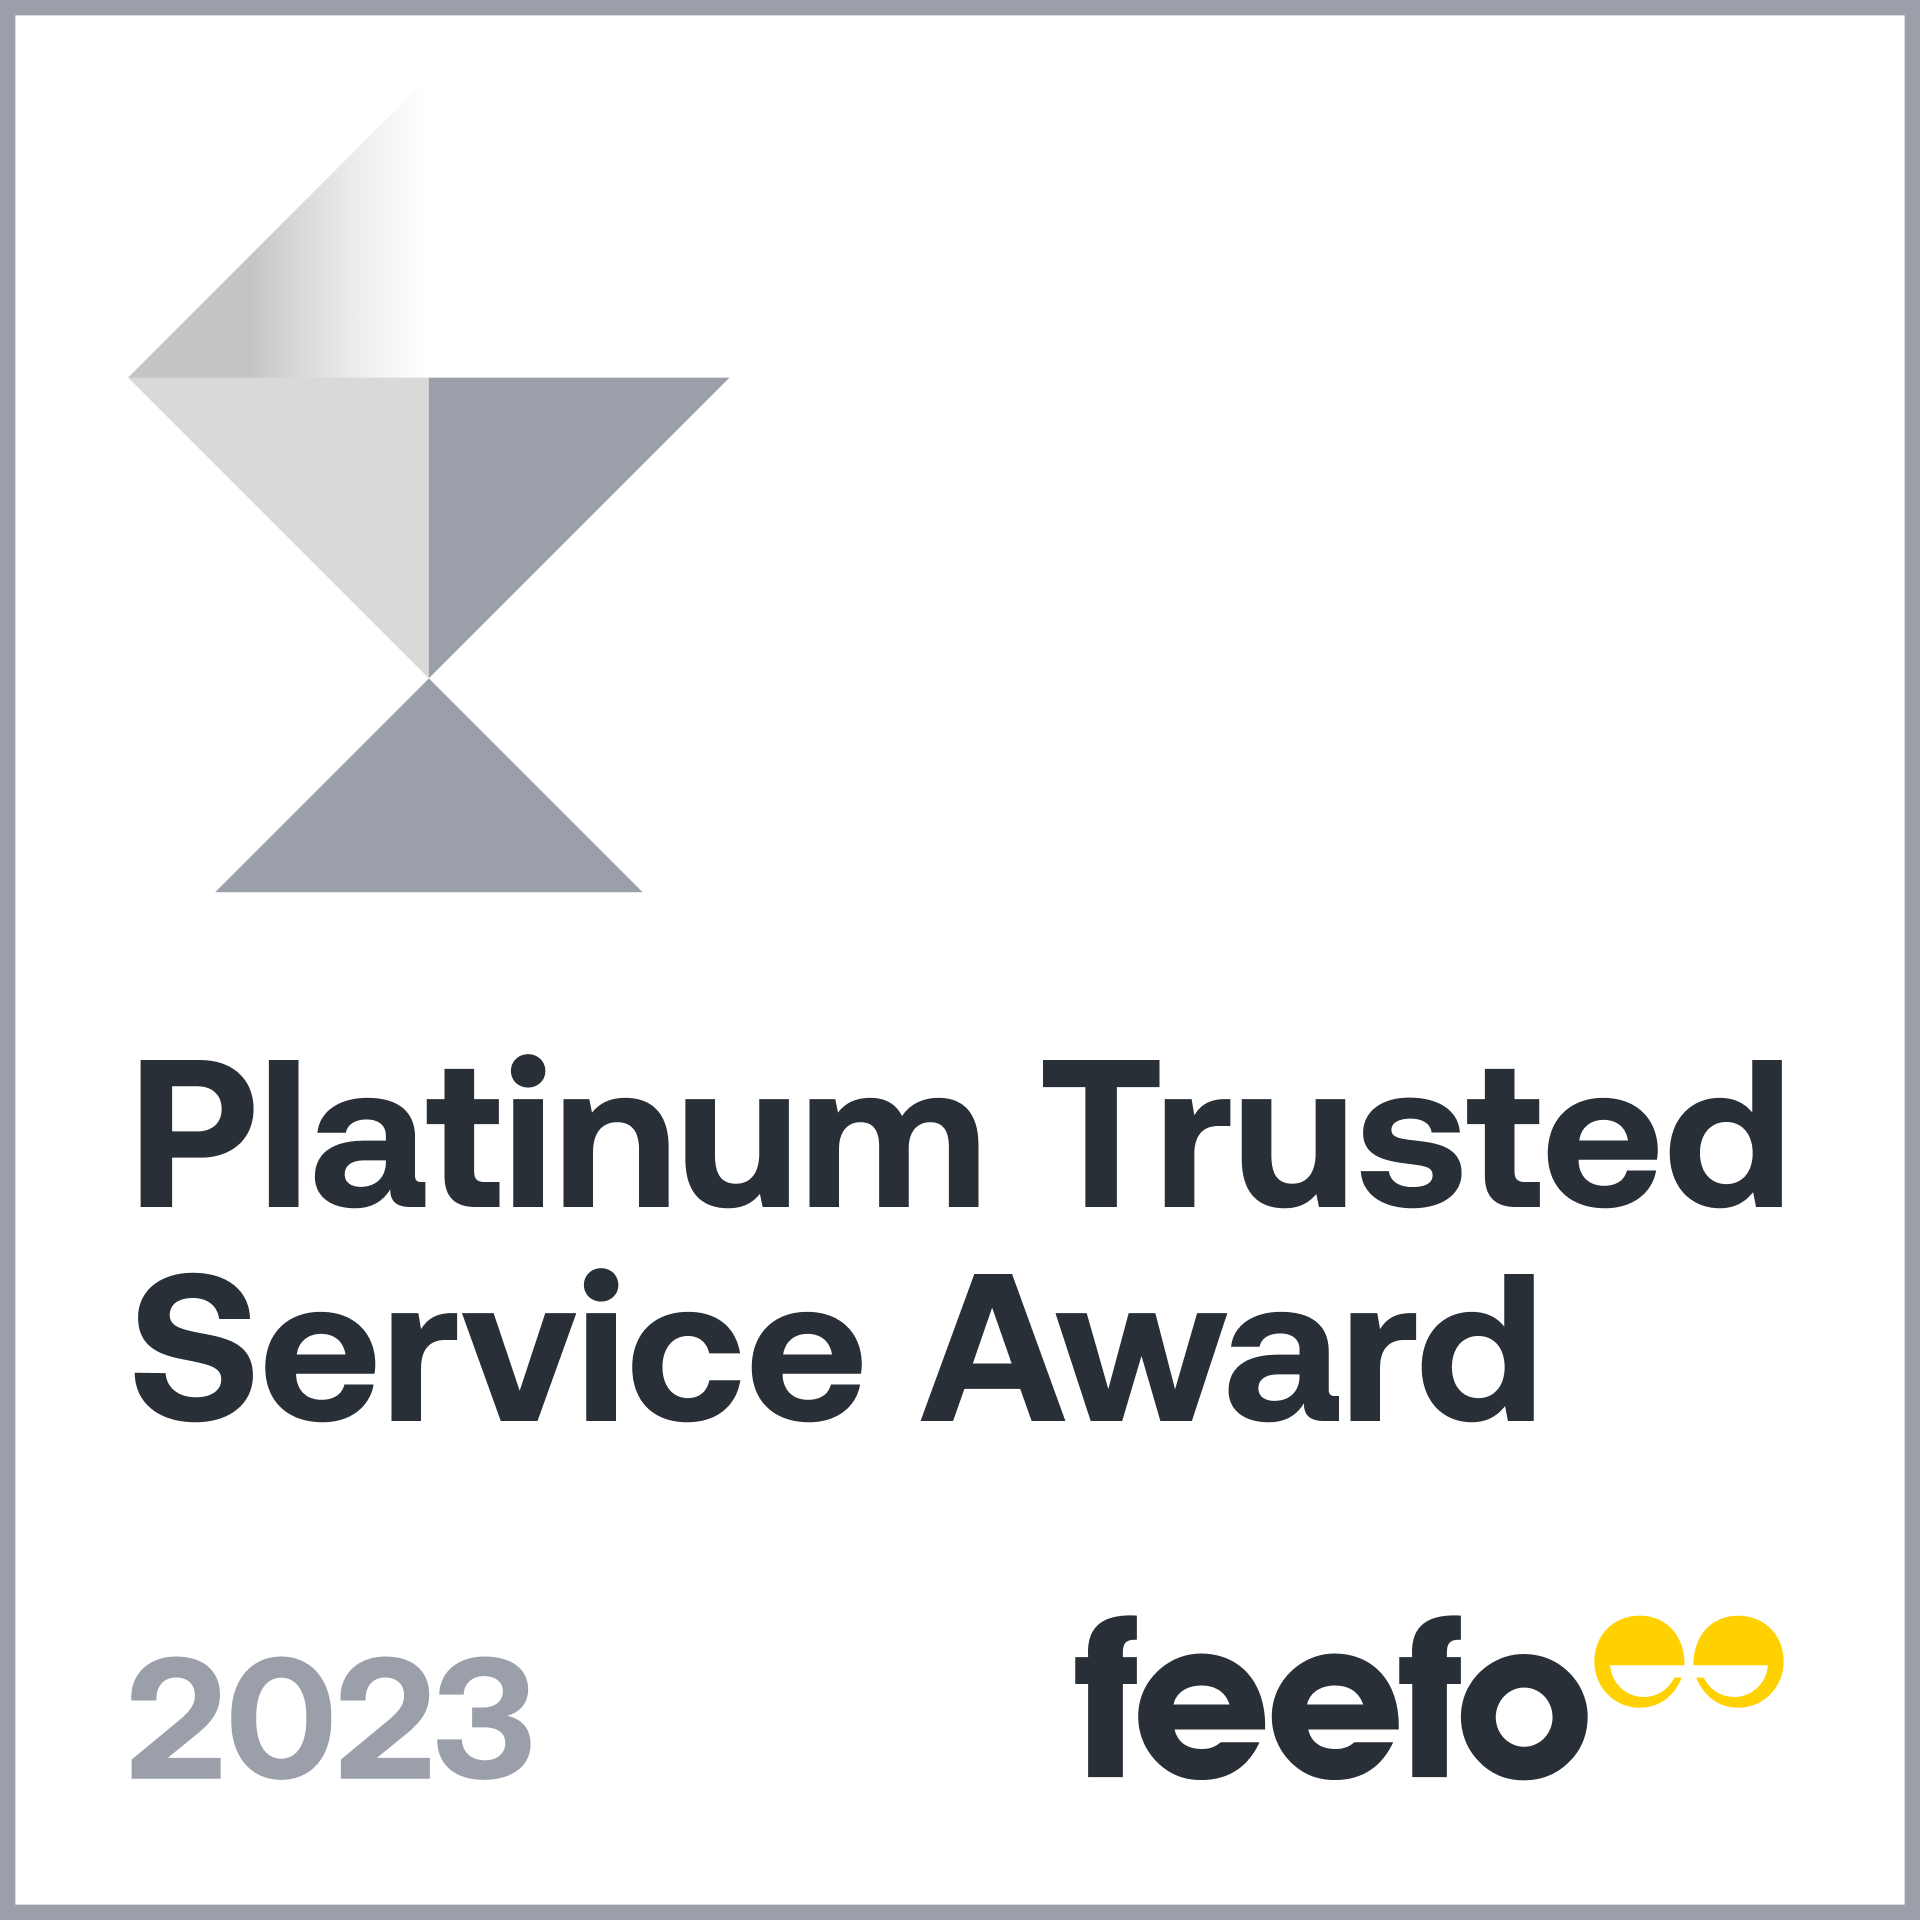 Platinum Trusted Service Award Badge